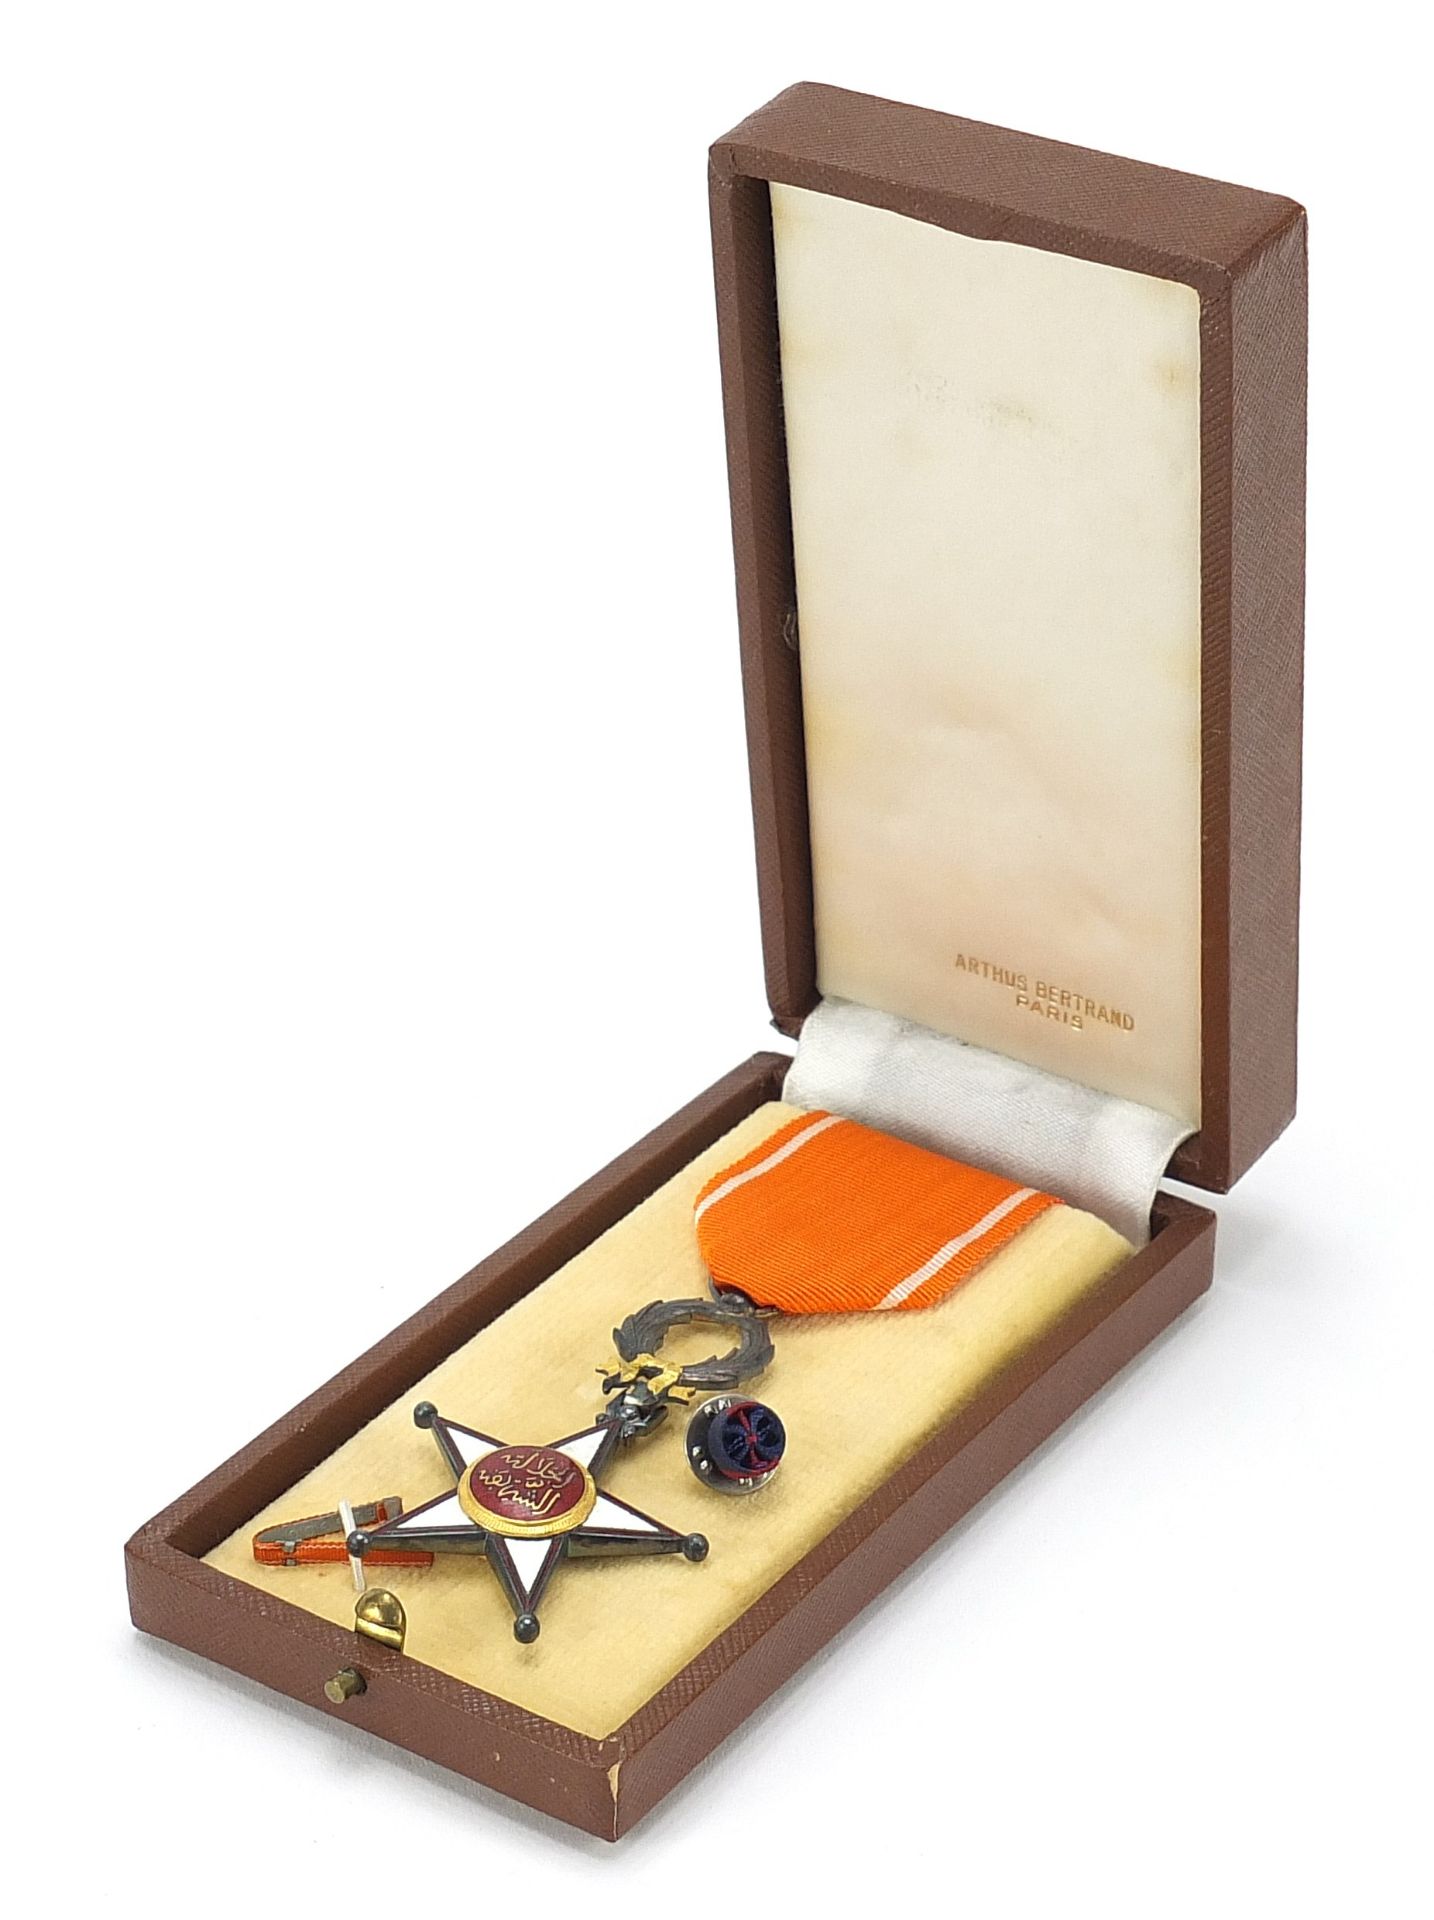 Arabian Military interest red and white enamel medal housed in an Arthus Bertrand box